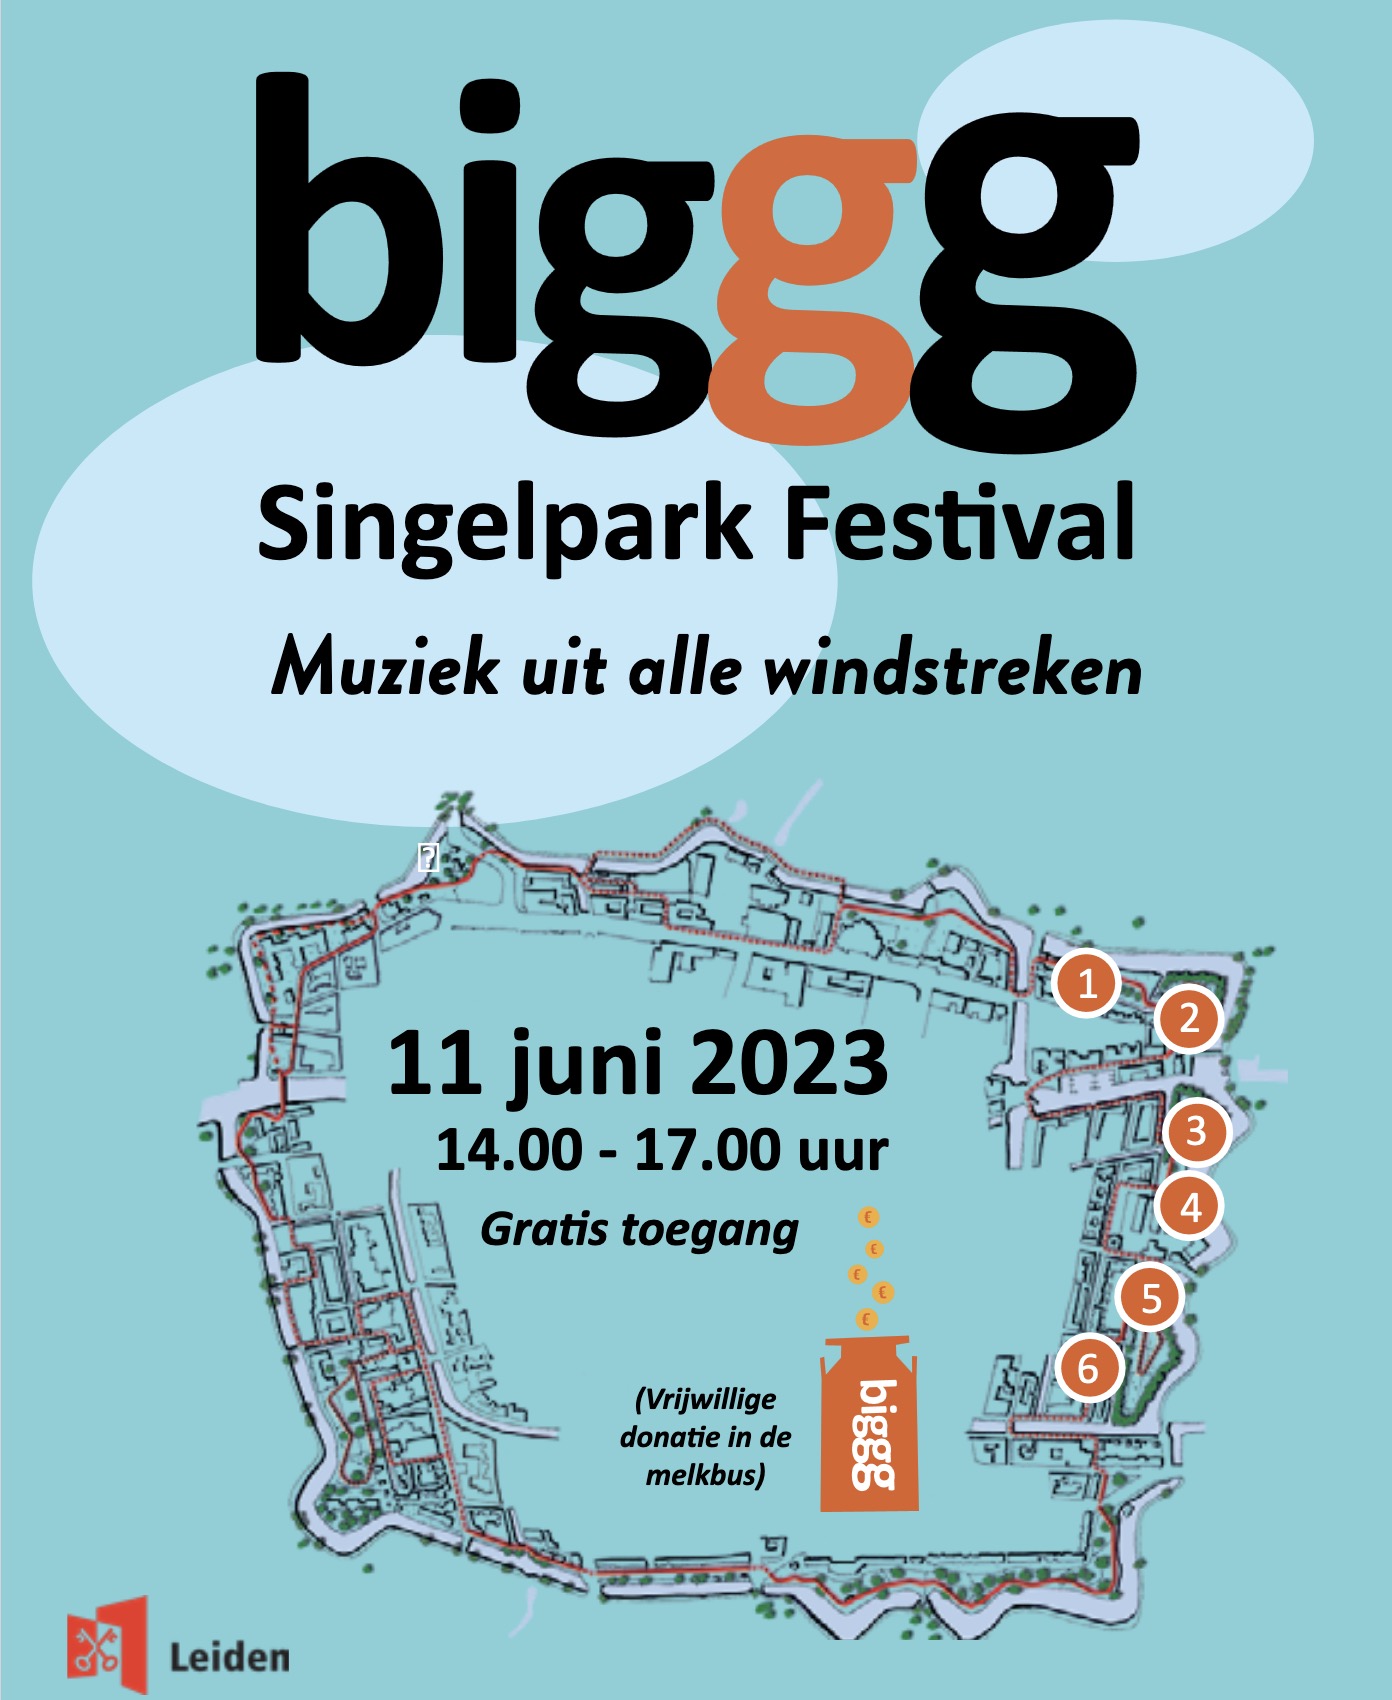 Biggg Singelpark Festival